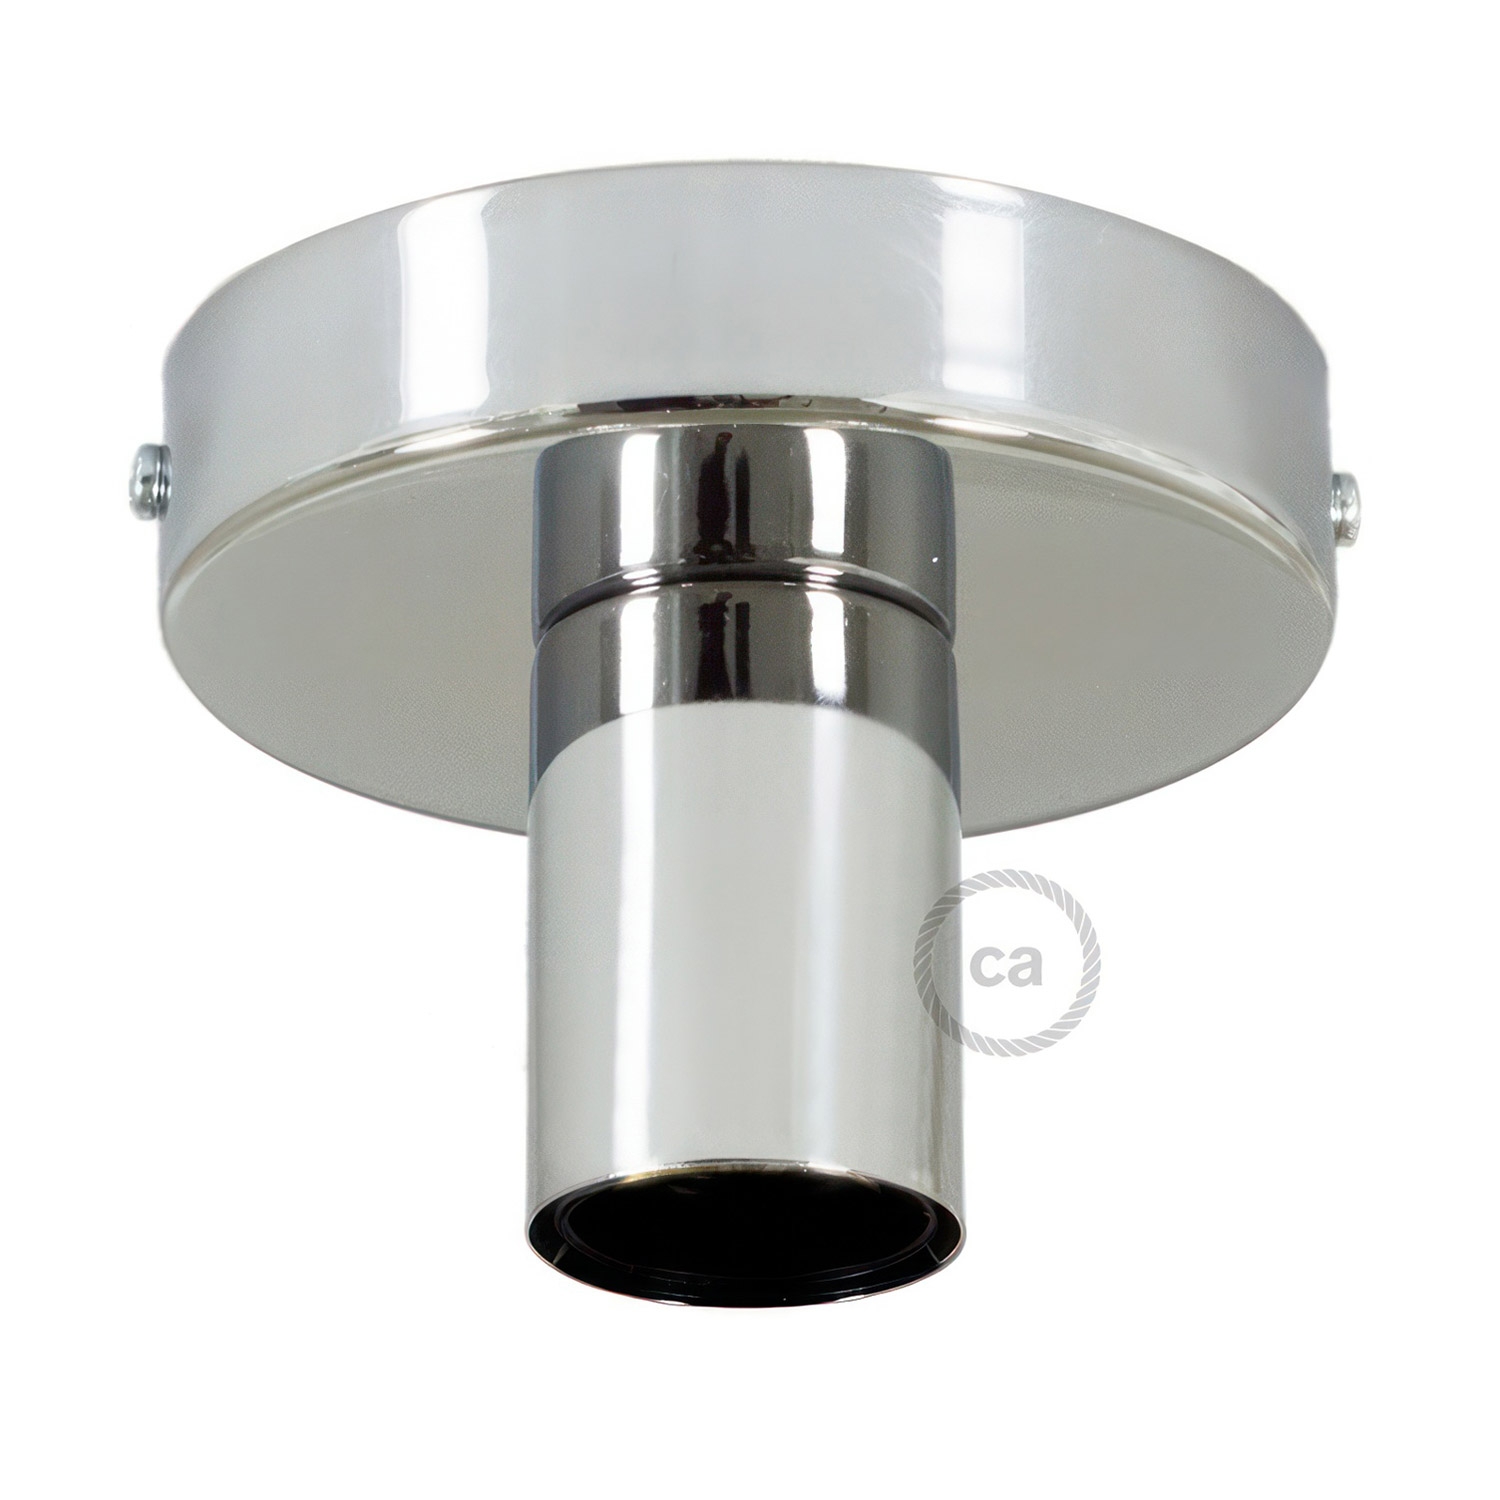 Fermaluce Metal,wall or ceiling flush light